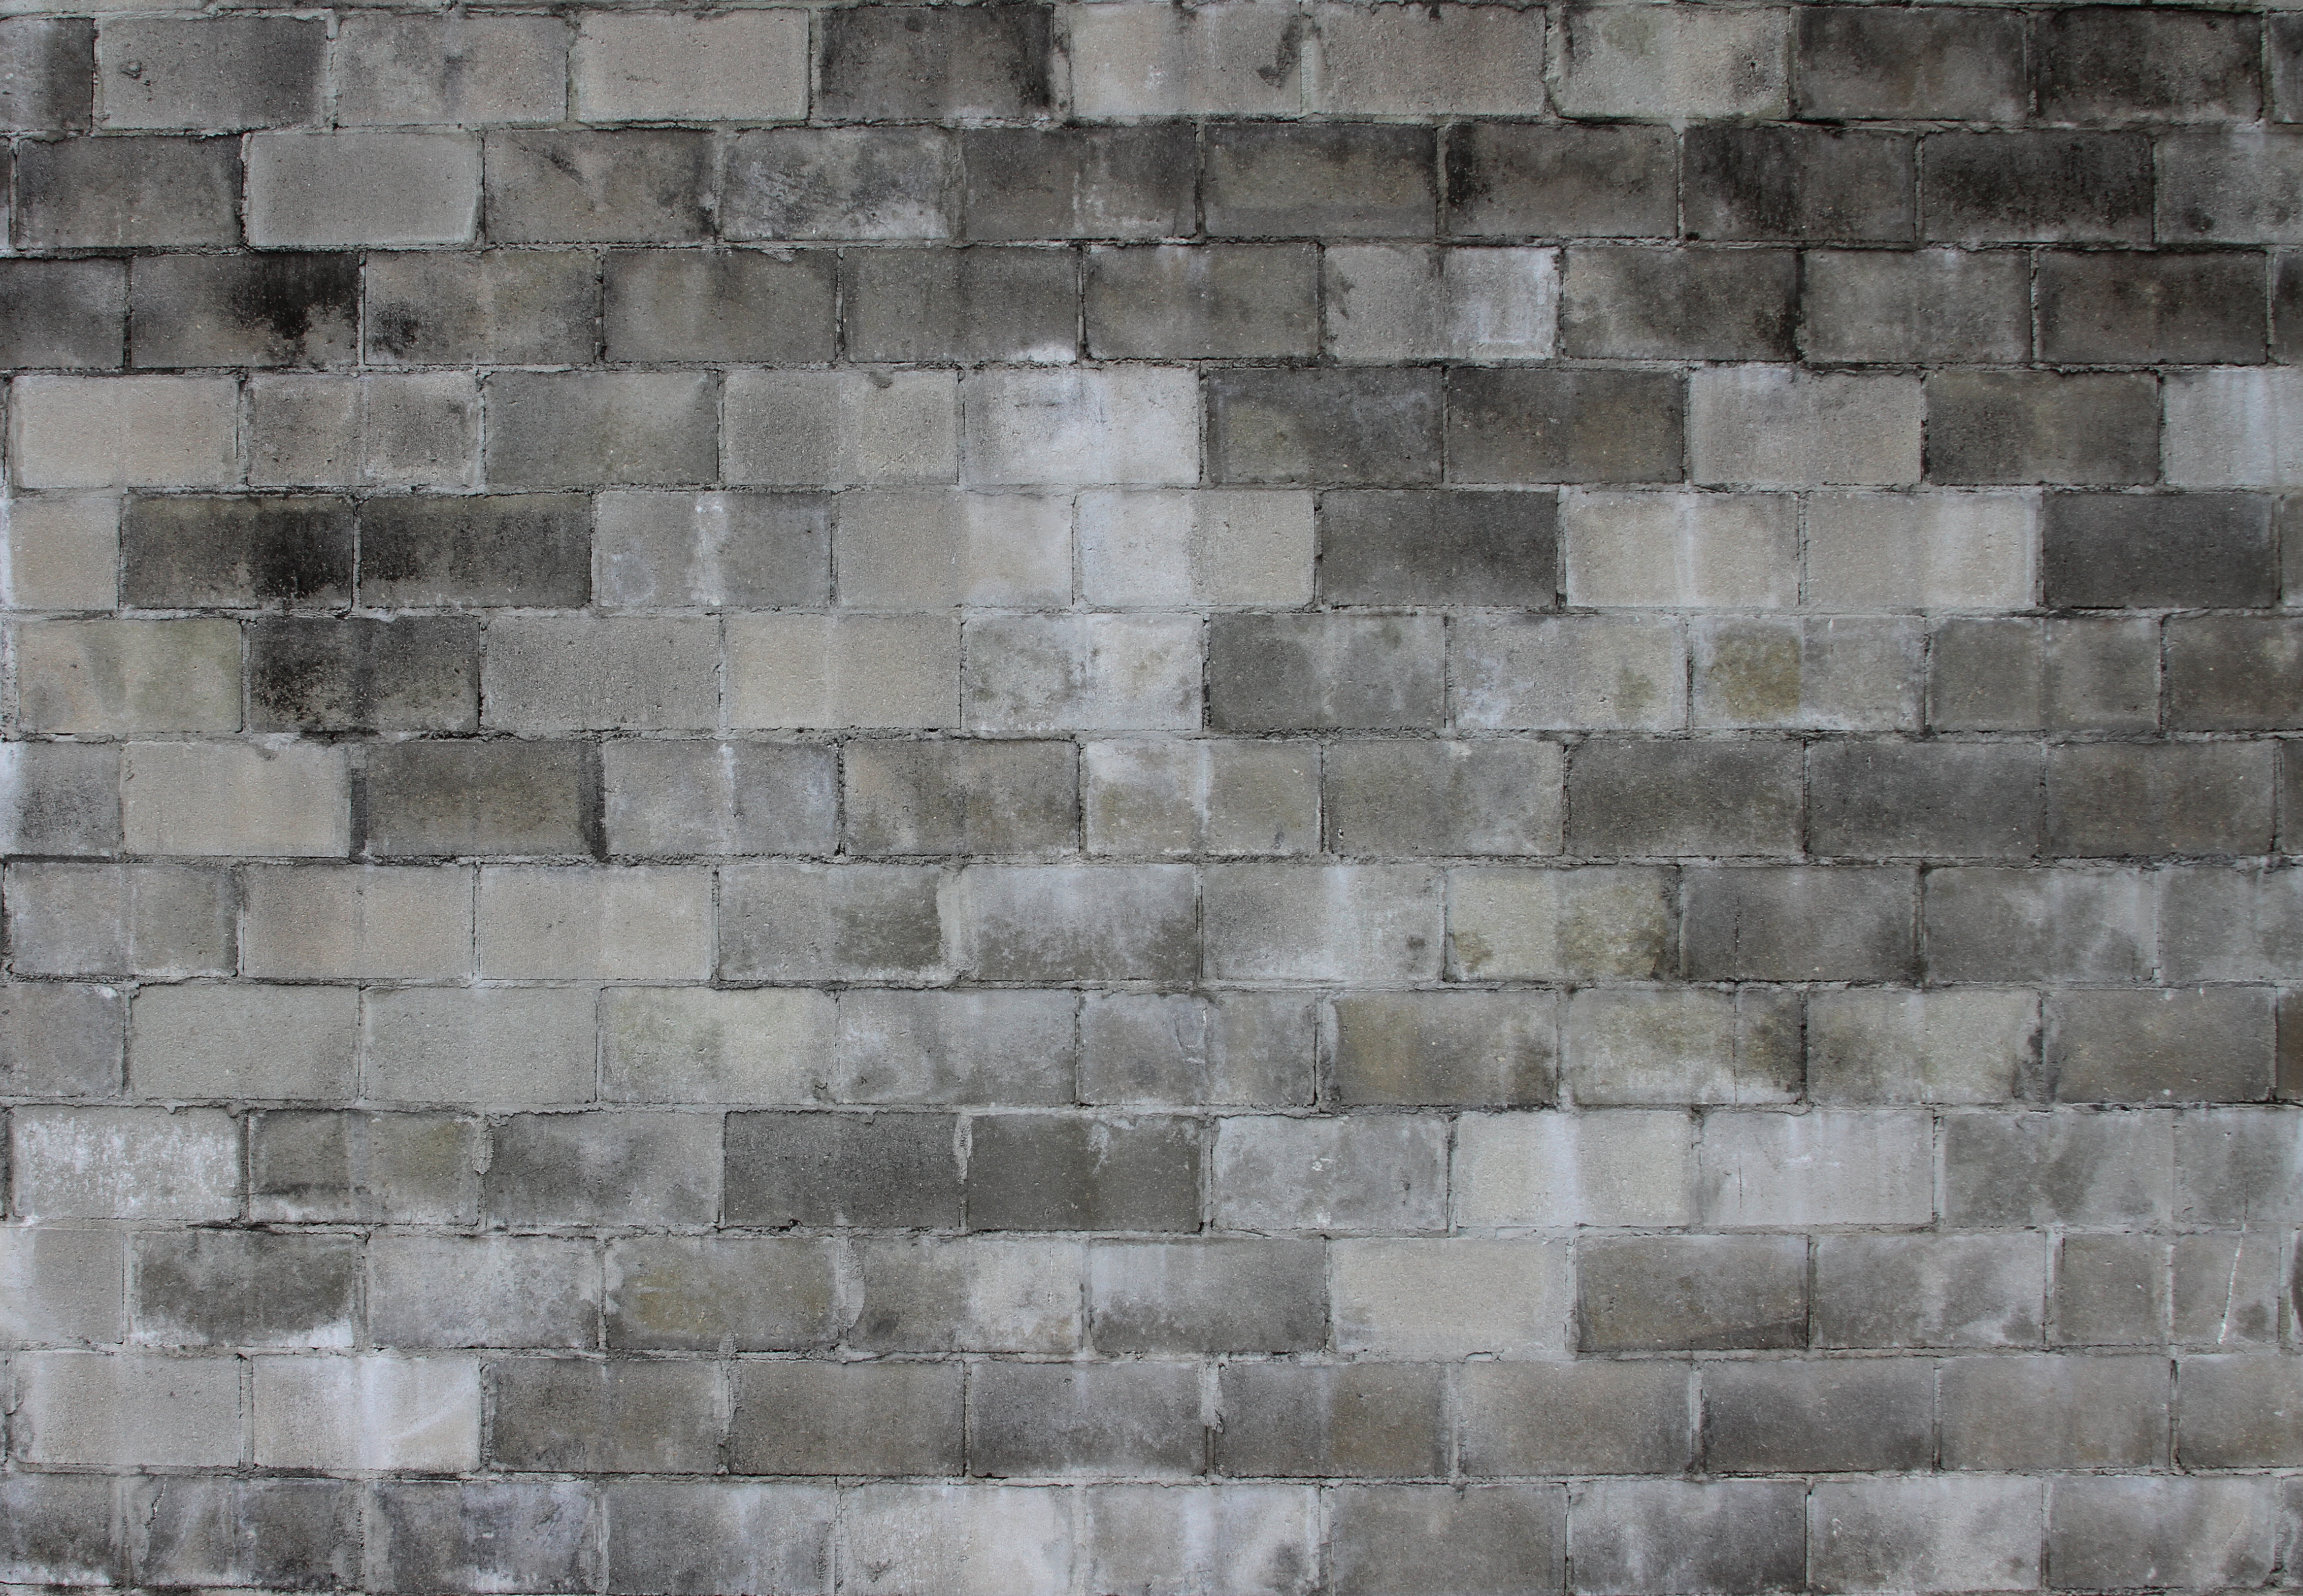 Weathered Cinder Block Wall Texture - 14Textures